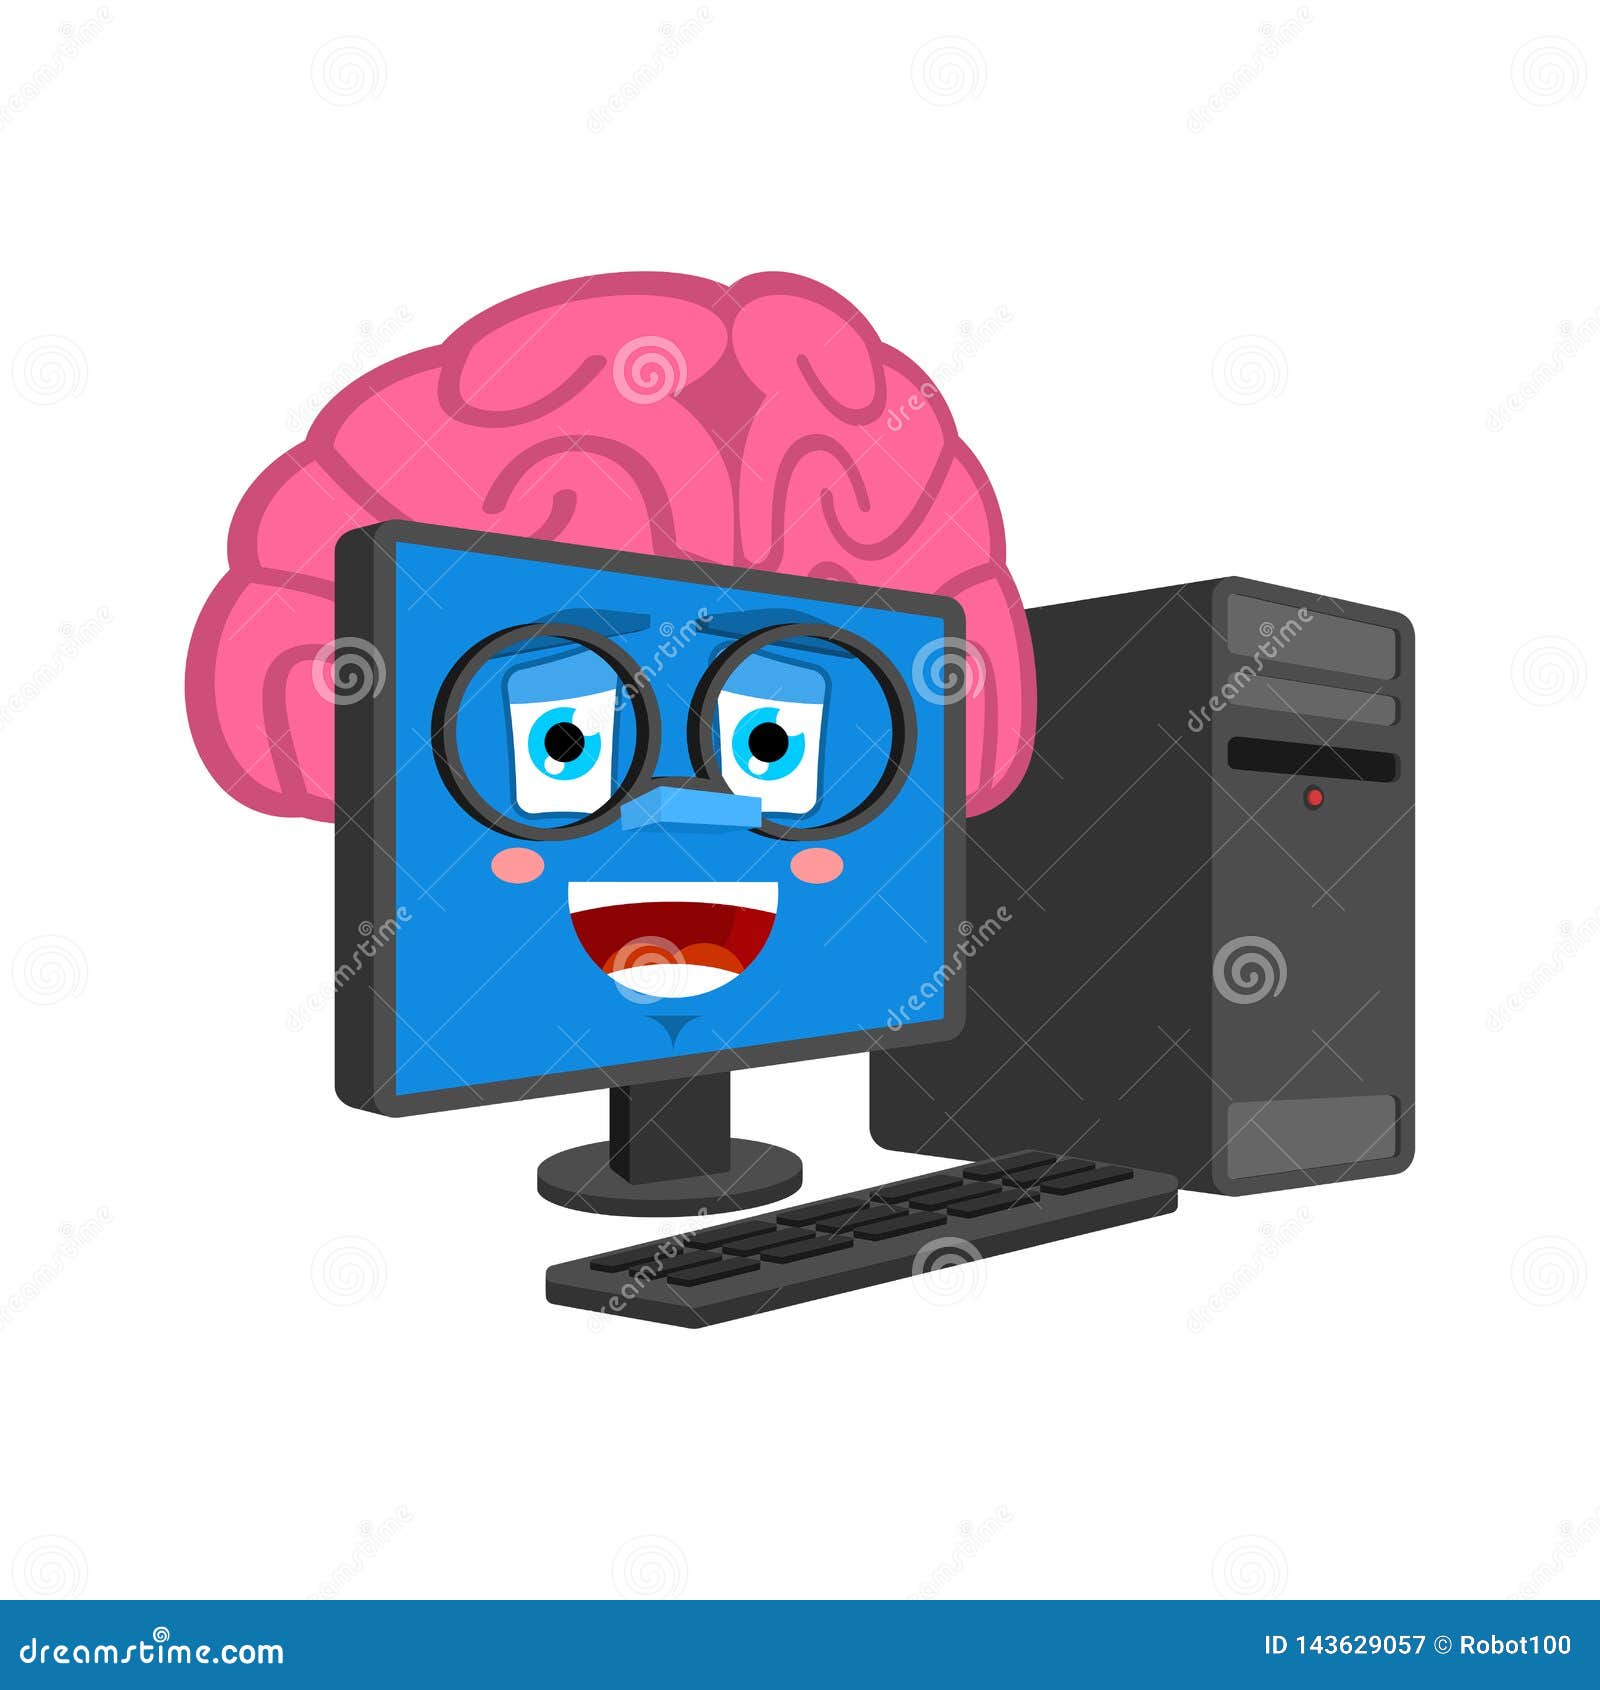 smart computer with brains . brain in pc cartoon style. data processor brainy 